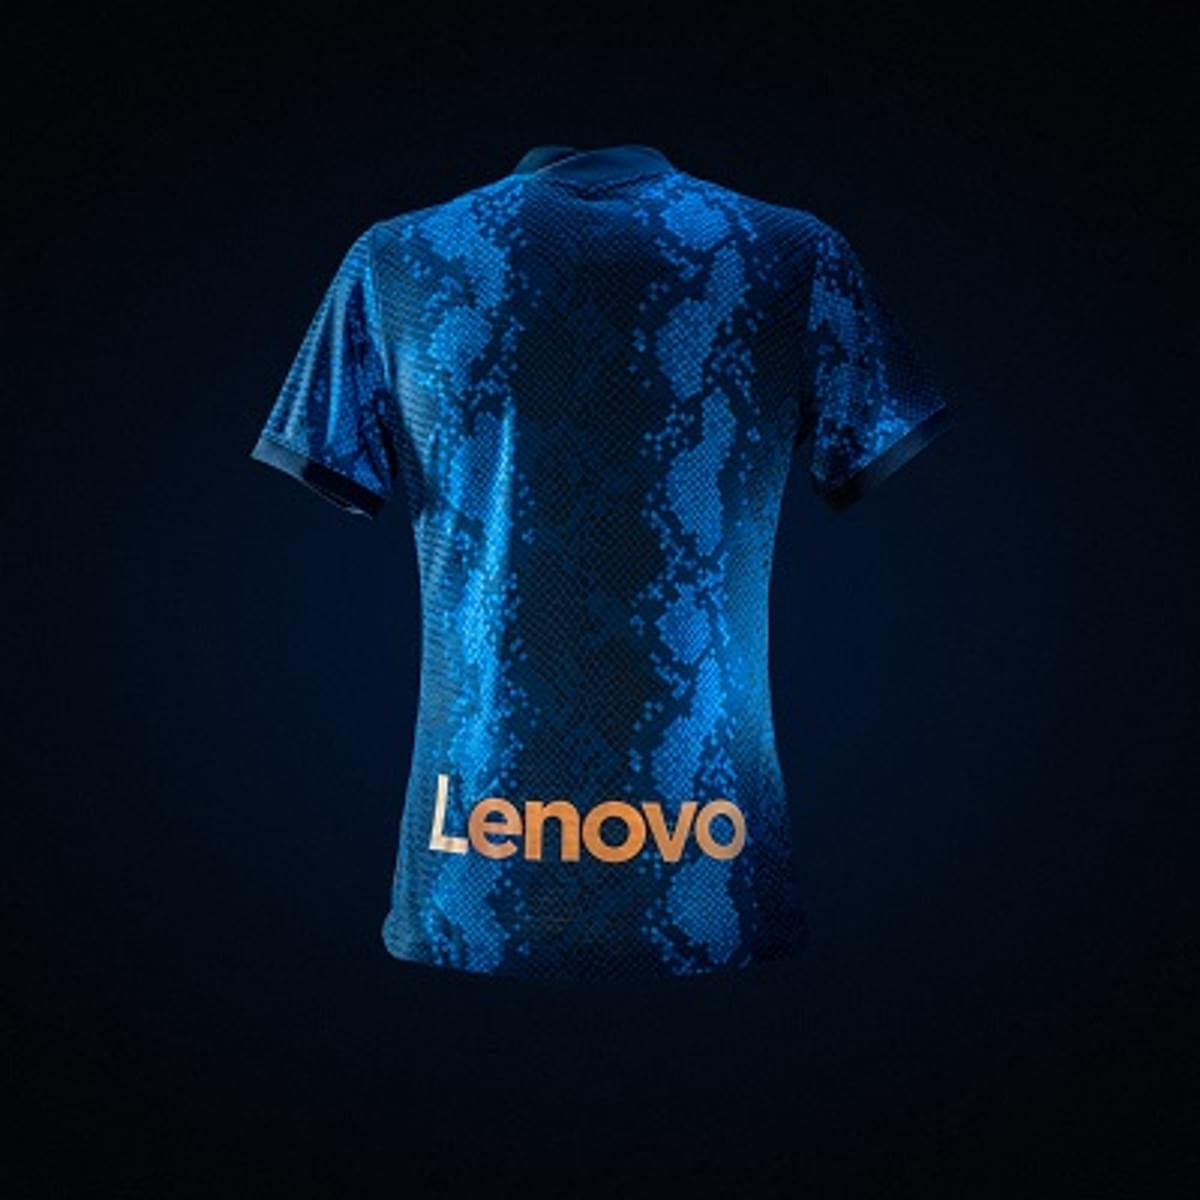 Lenovo en FC Internazionale Milano versterken partnership image